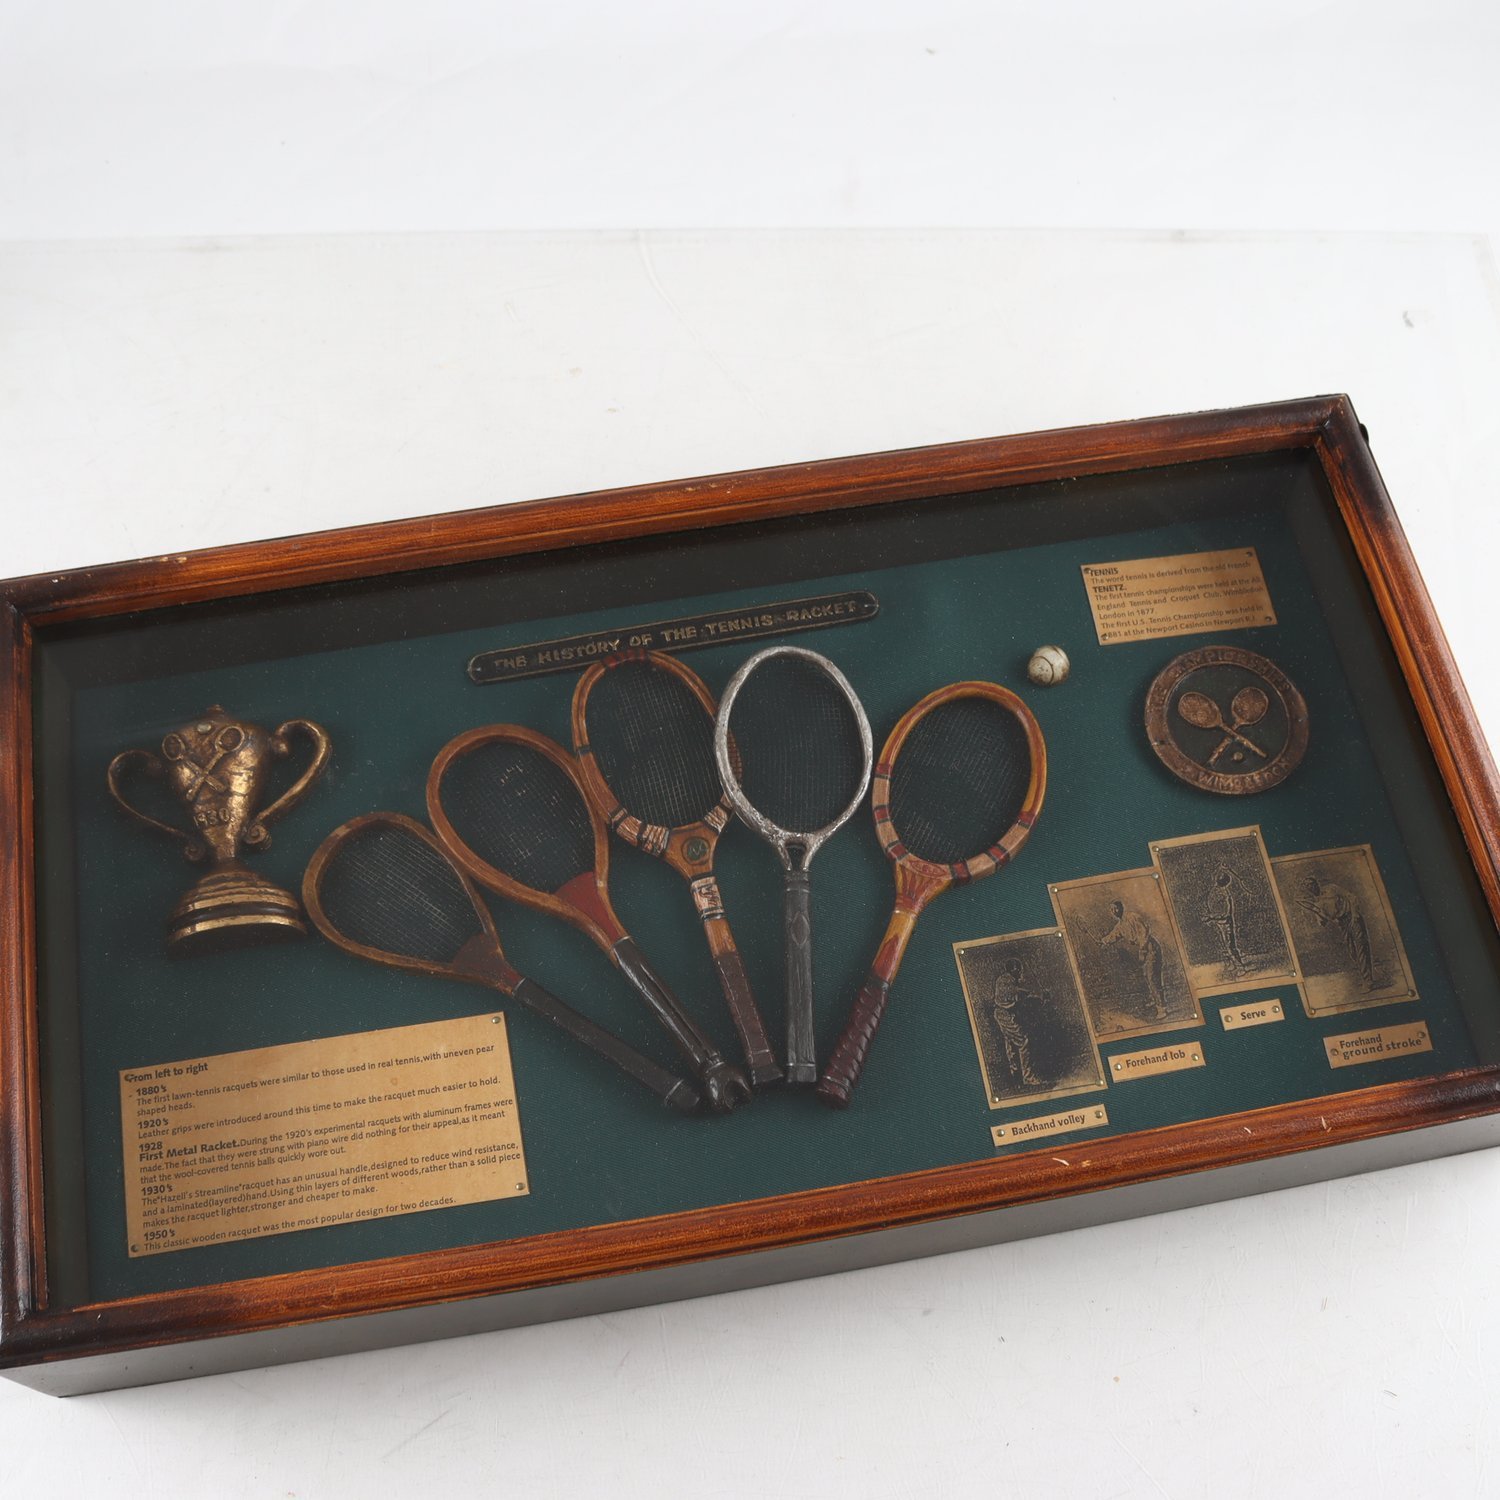 Inramat i box, glasskiva, The history of the tennis racket. Endast avhämtning